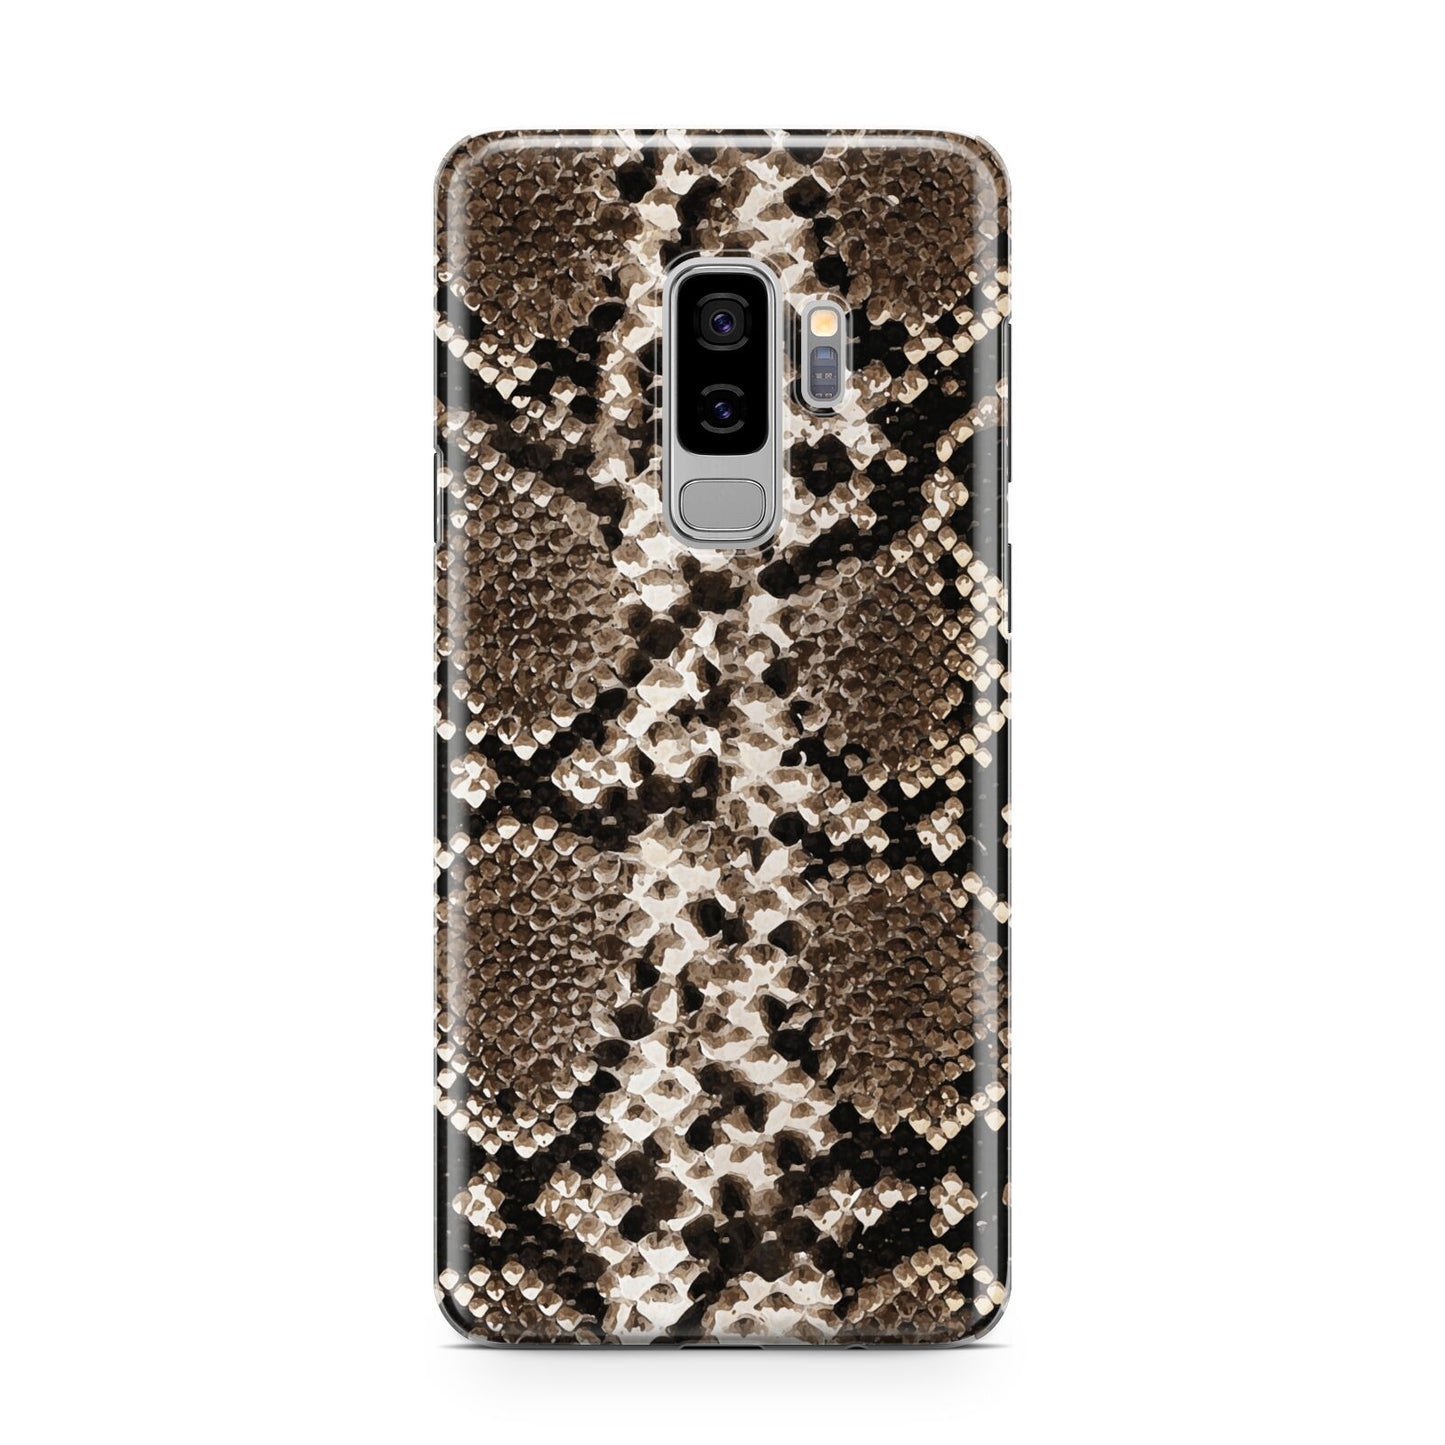 Snakeskin Pattern Samsung Galaxy S9 Plus Case on Silver phone